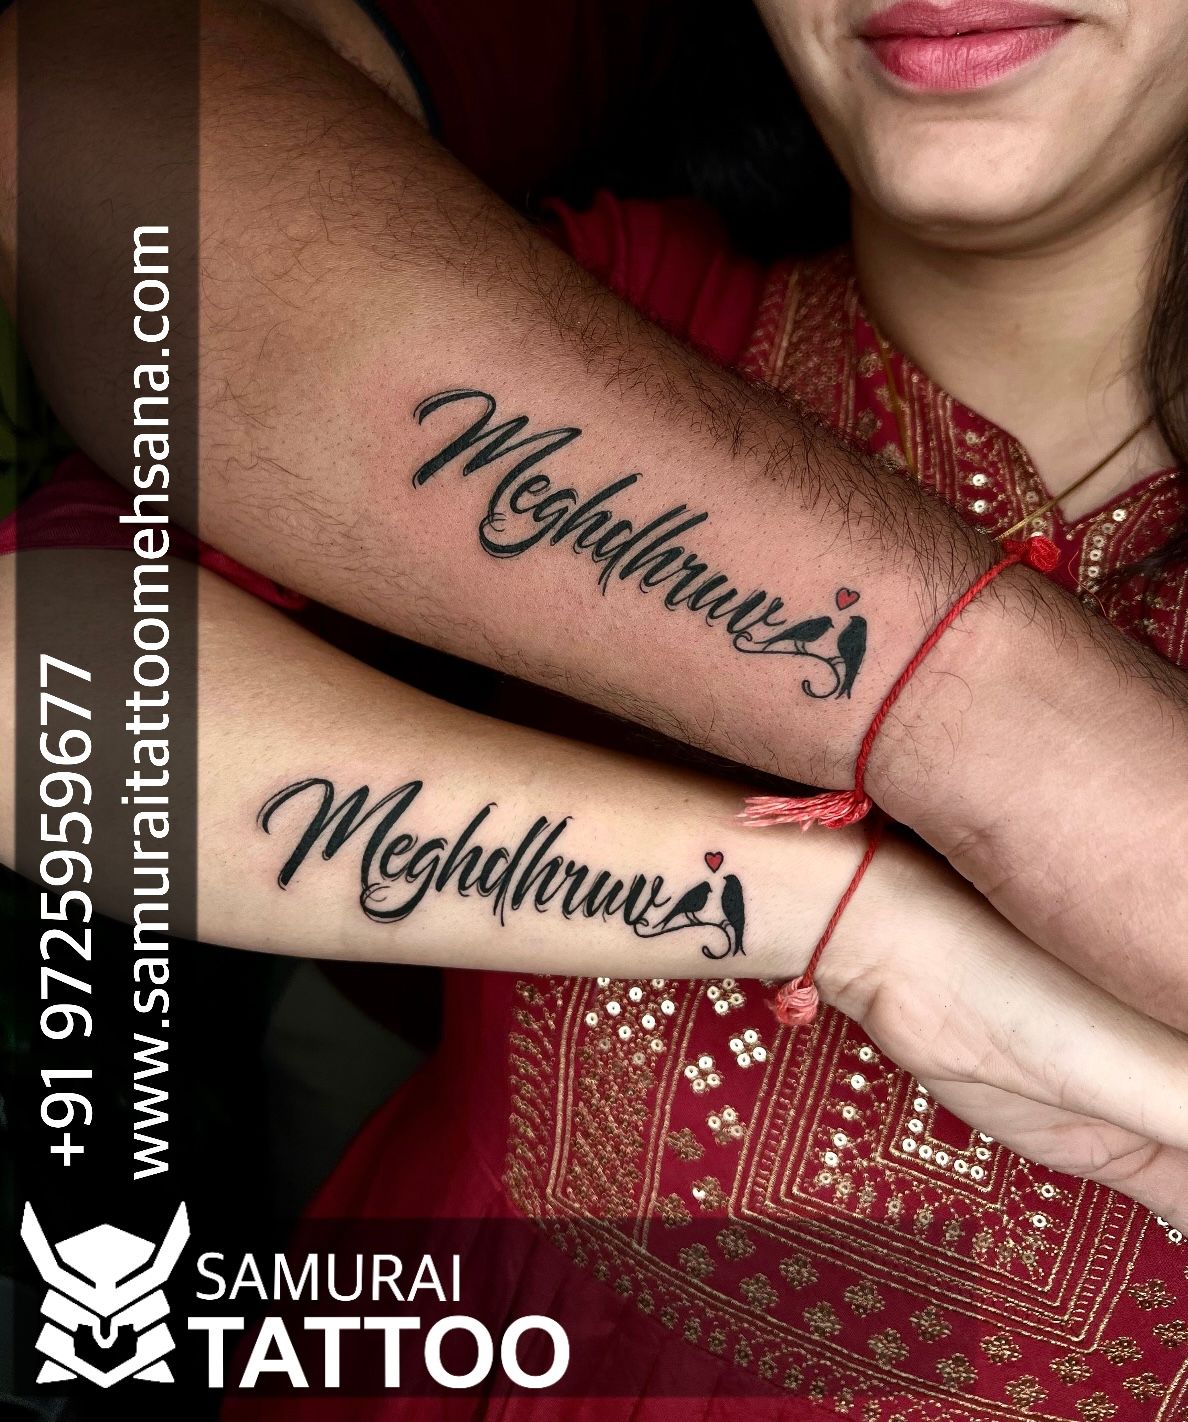 Tattoo uploaded by Vipul Chaudhary • Nishu name tattoo | Hetul name tattoo | Tattoo for couple |Couple tattoo • Tattoodo